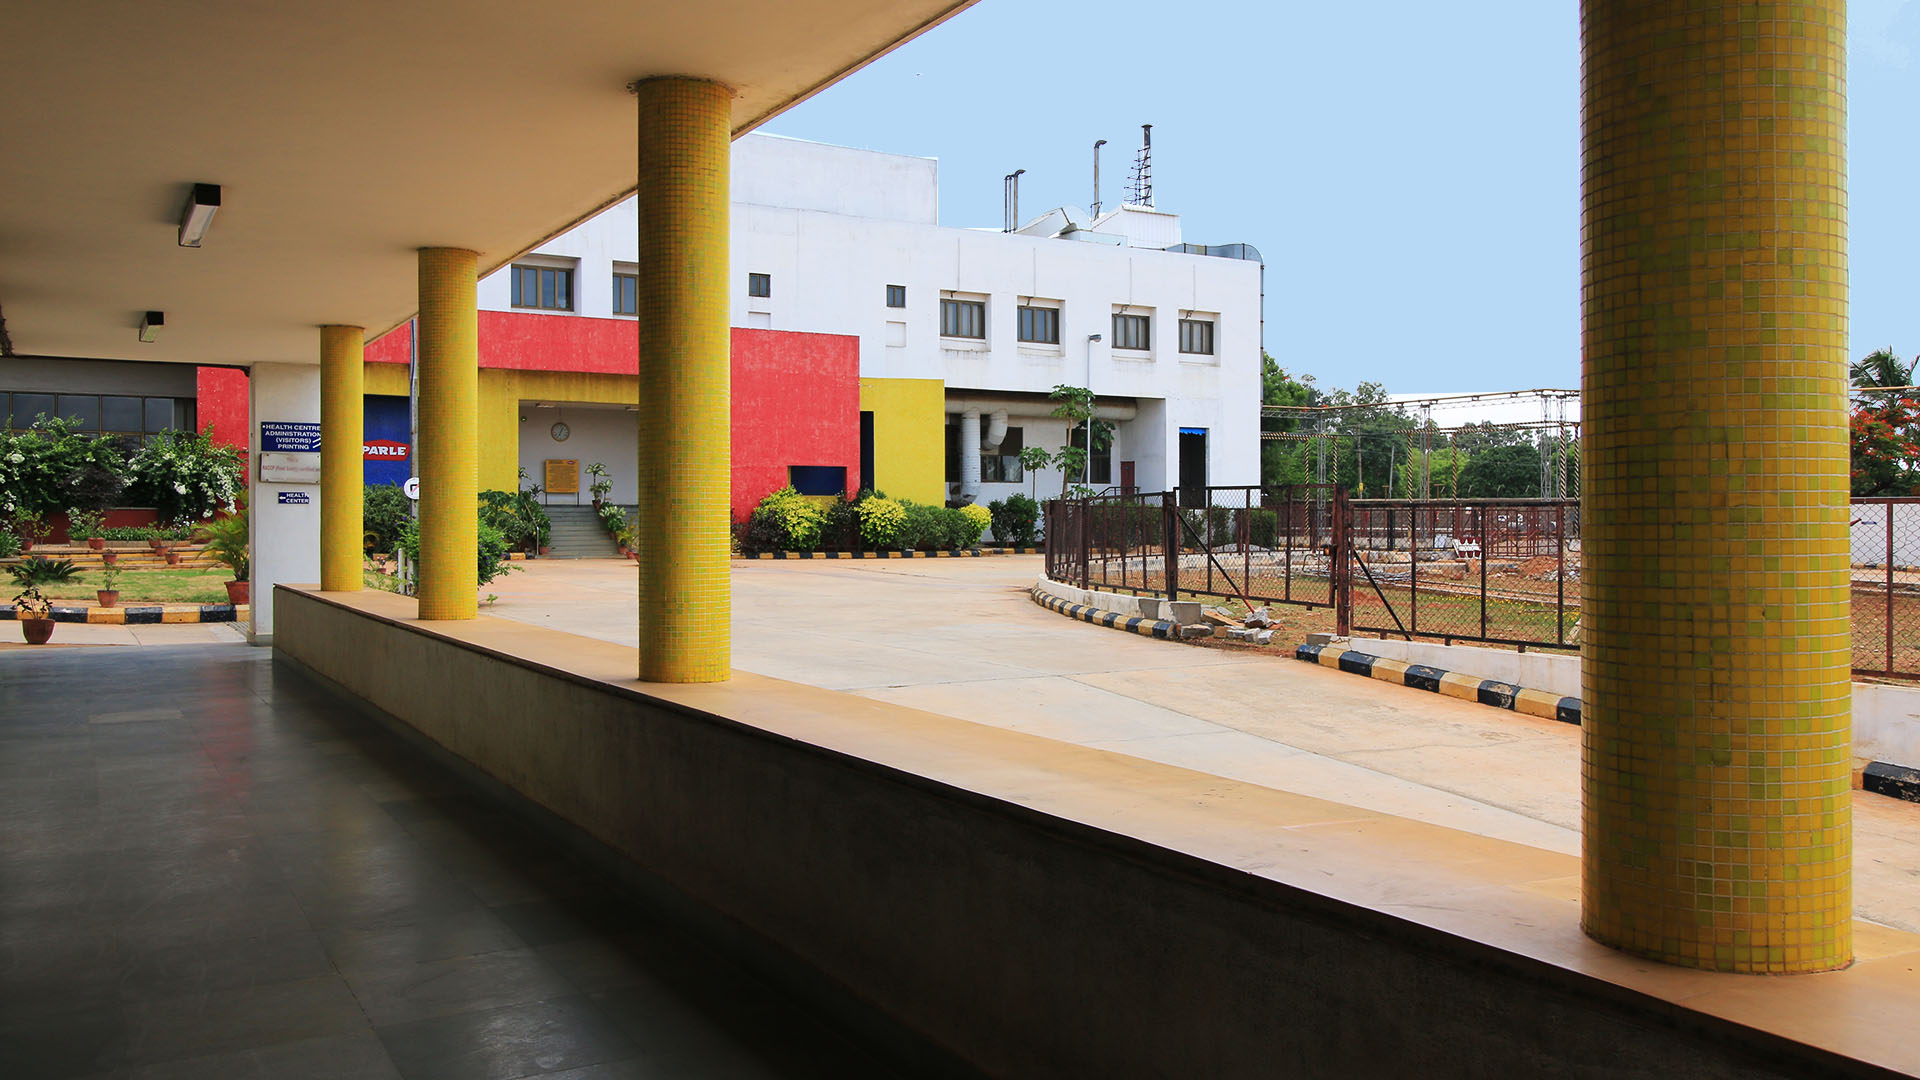 Parle Biscuit Factory Bengaluru